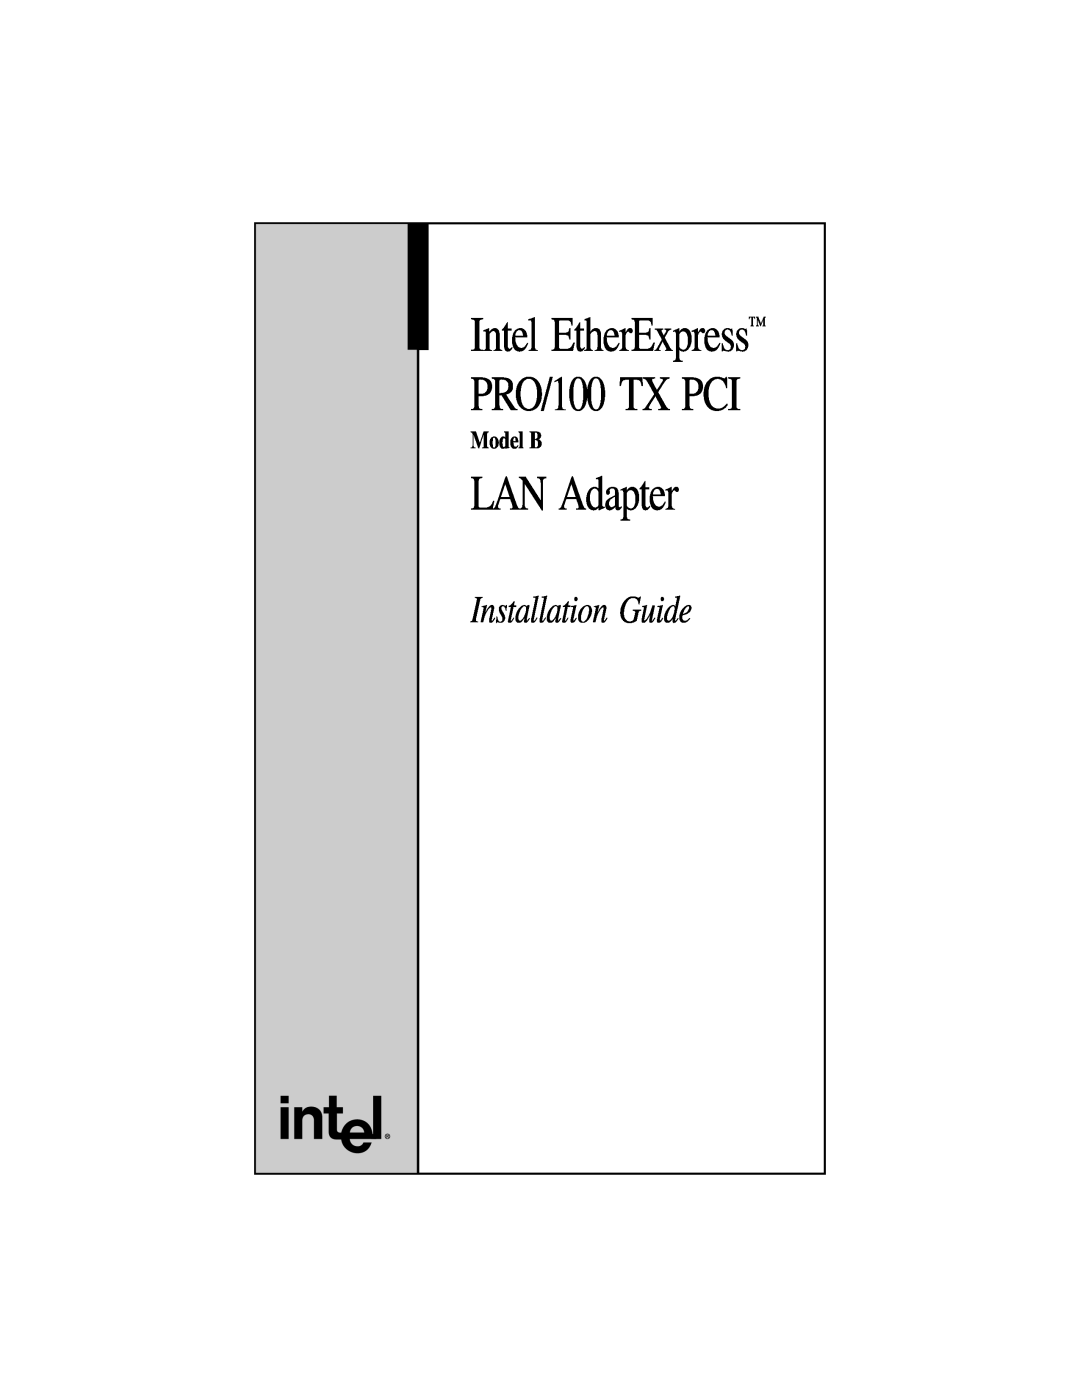 Intel manual LAN Adapter, Installation Guide, Intel EtherExpress PRO/100 TX PCI, Model B 